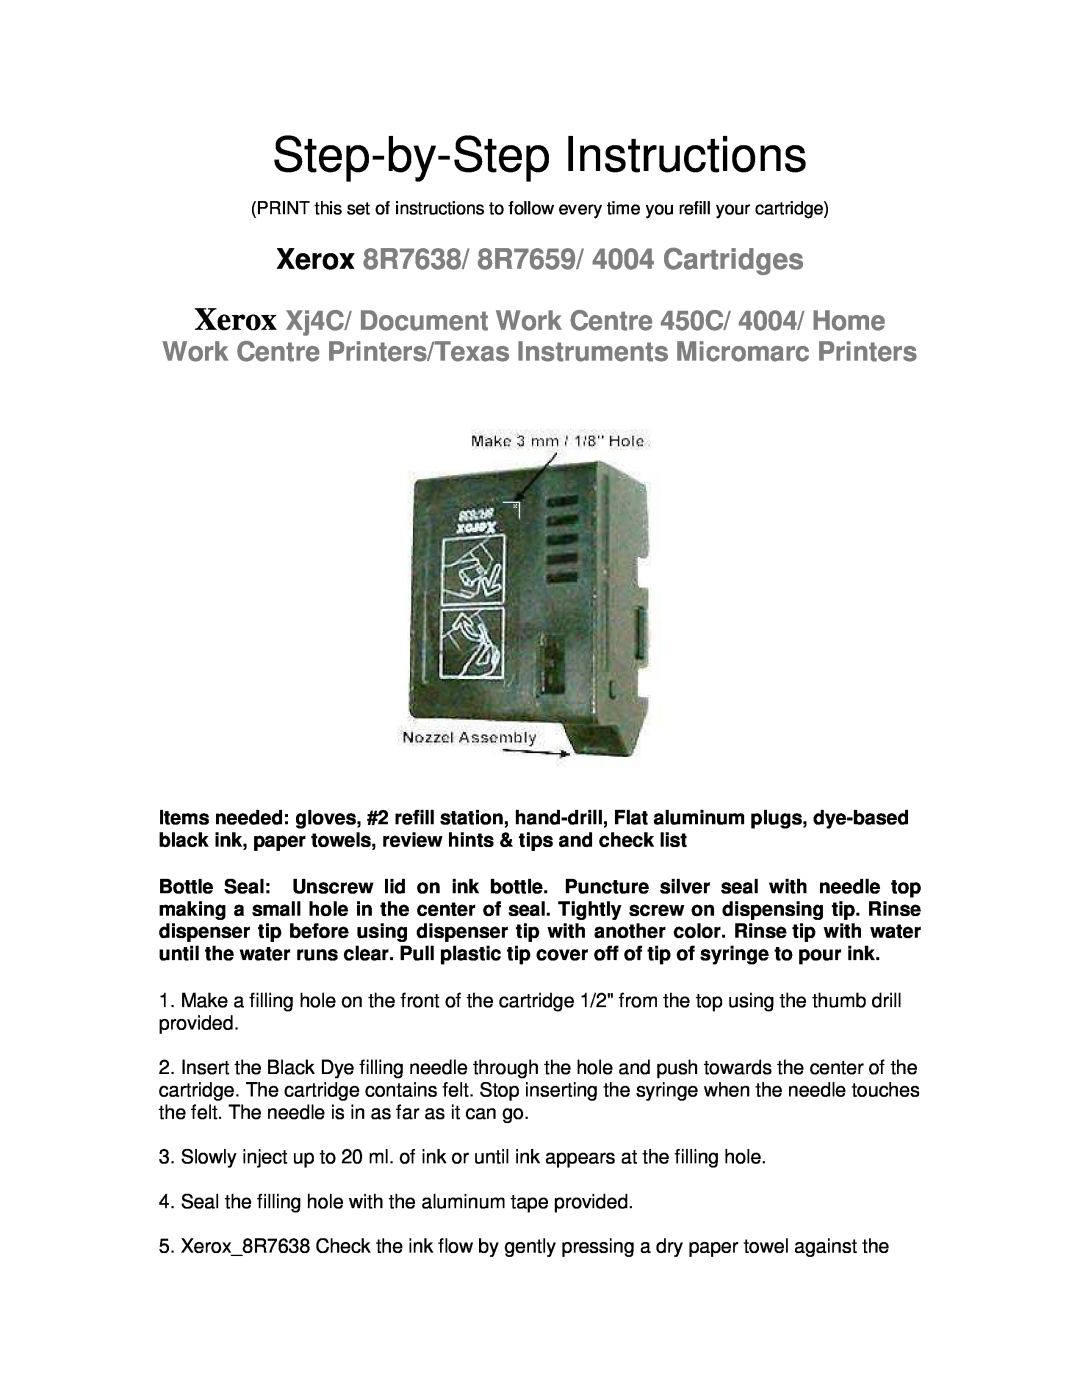 Xerox manual Step-by-StepInstructions, Xerox 8R7638/ 8R7659/ 4004 Cartridges 